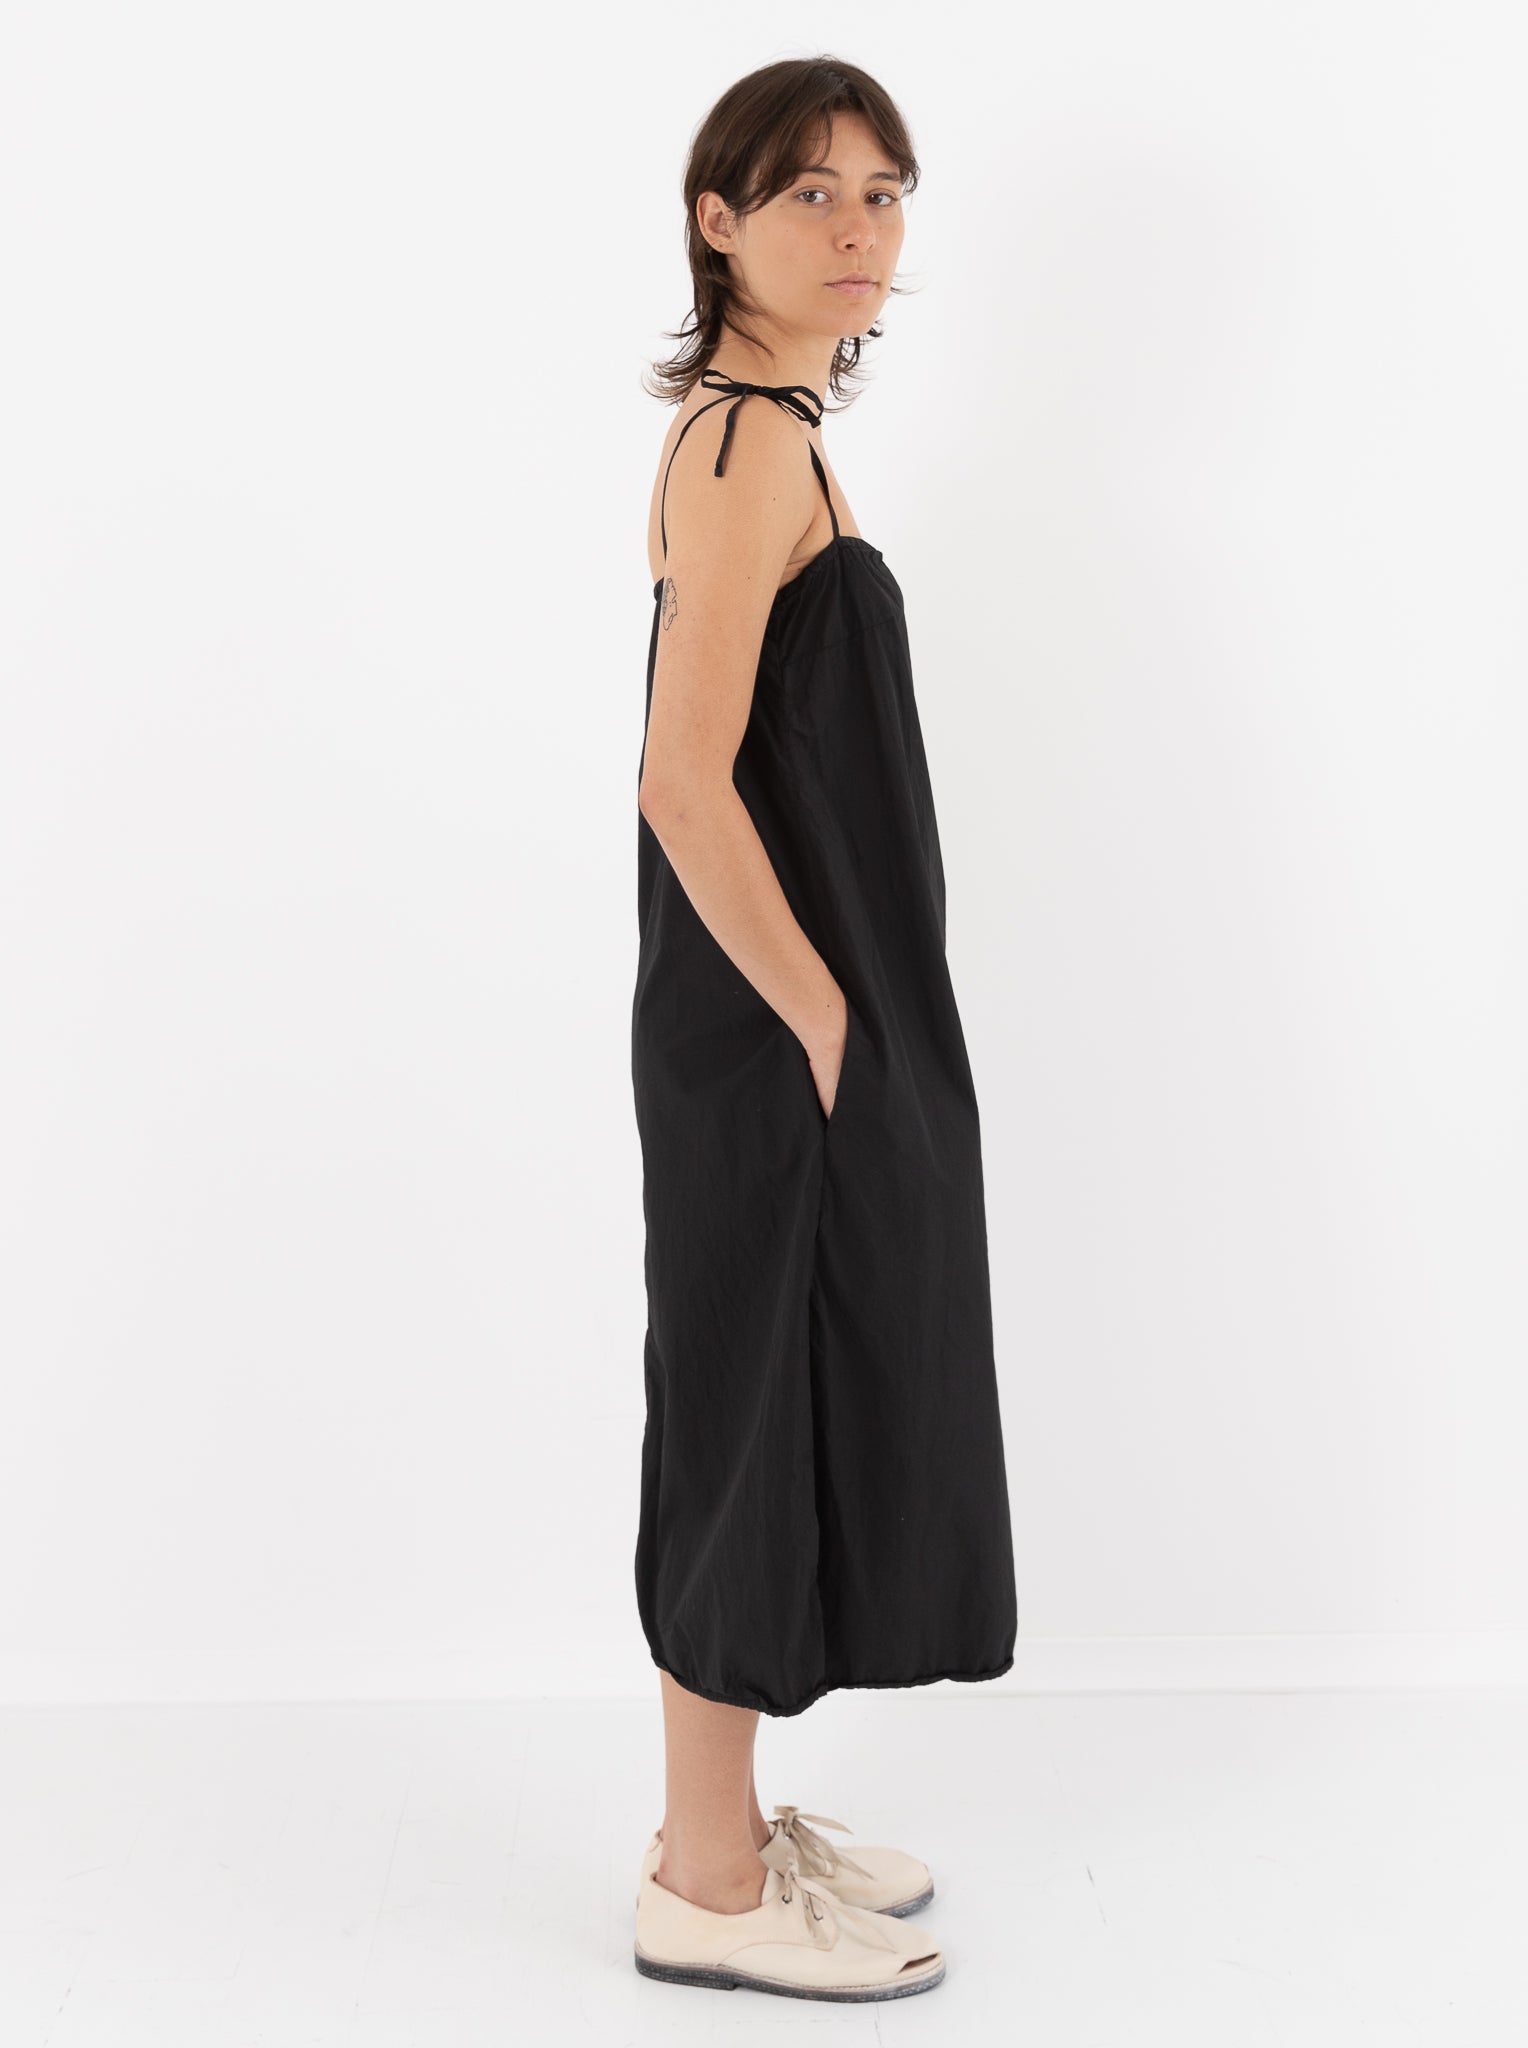 Nitto Sopraveste Dress, Black - Worthwhile, Inc.